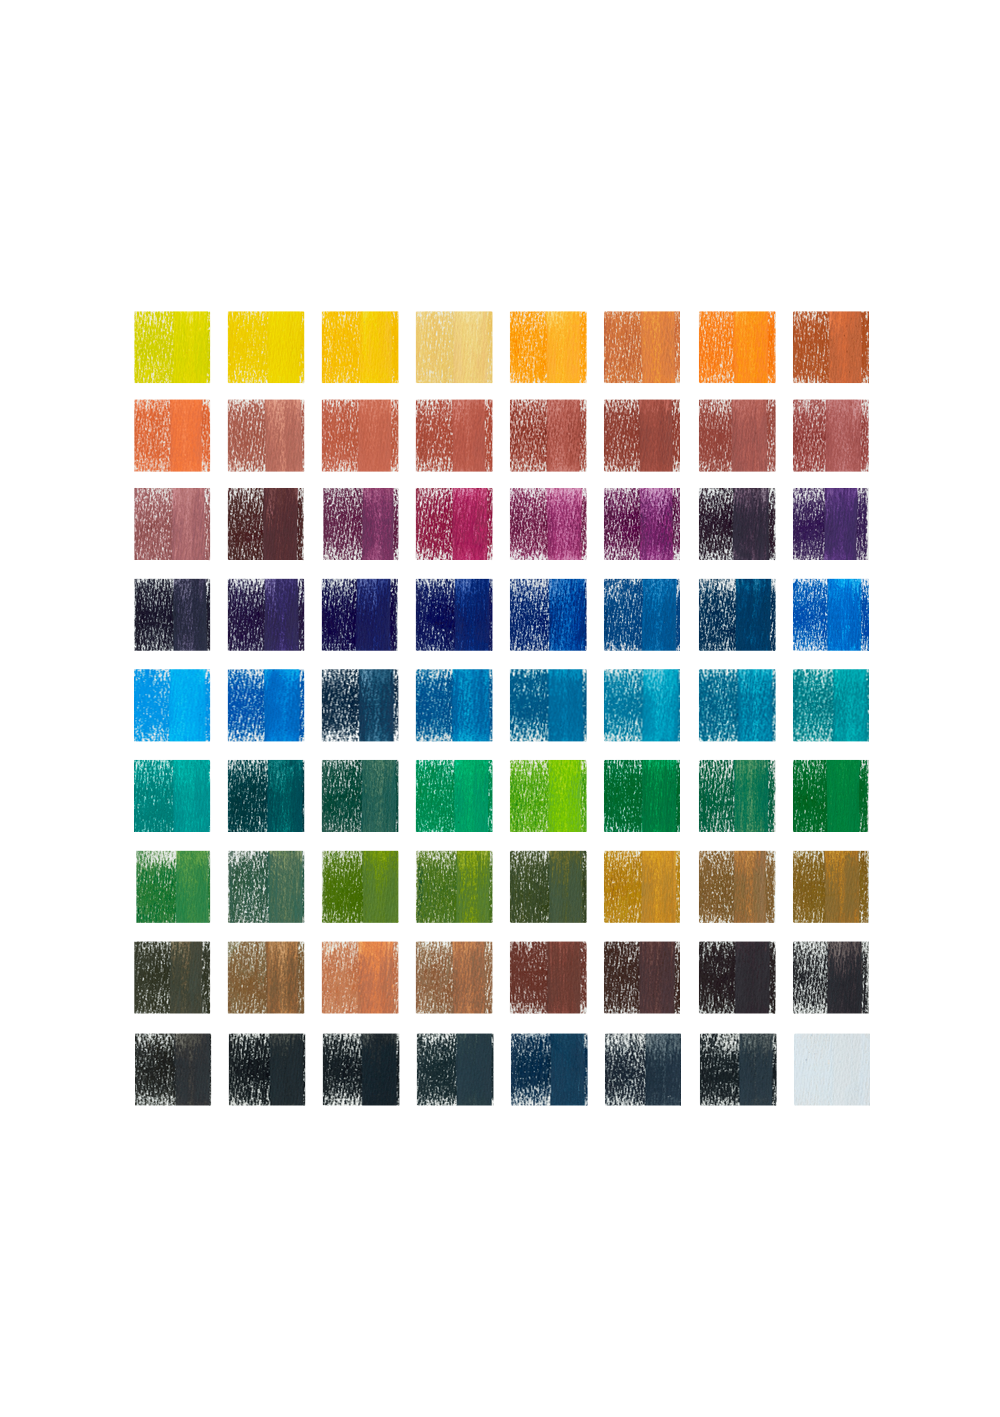 barras-de-tinta-solubles-al-agua-derwent-inktense-set-72-colores